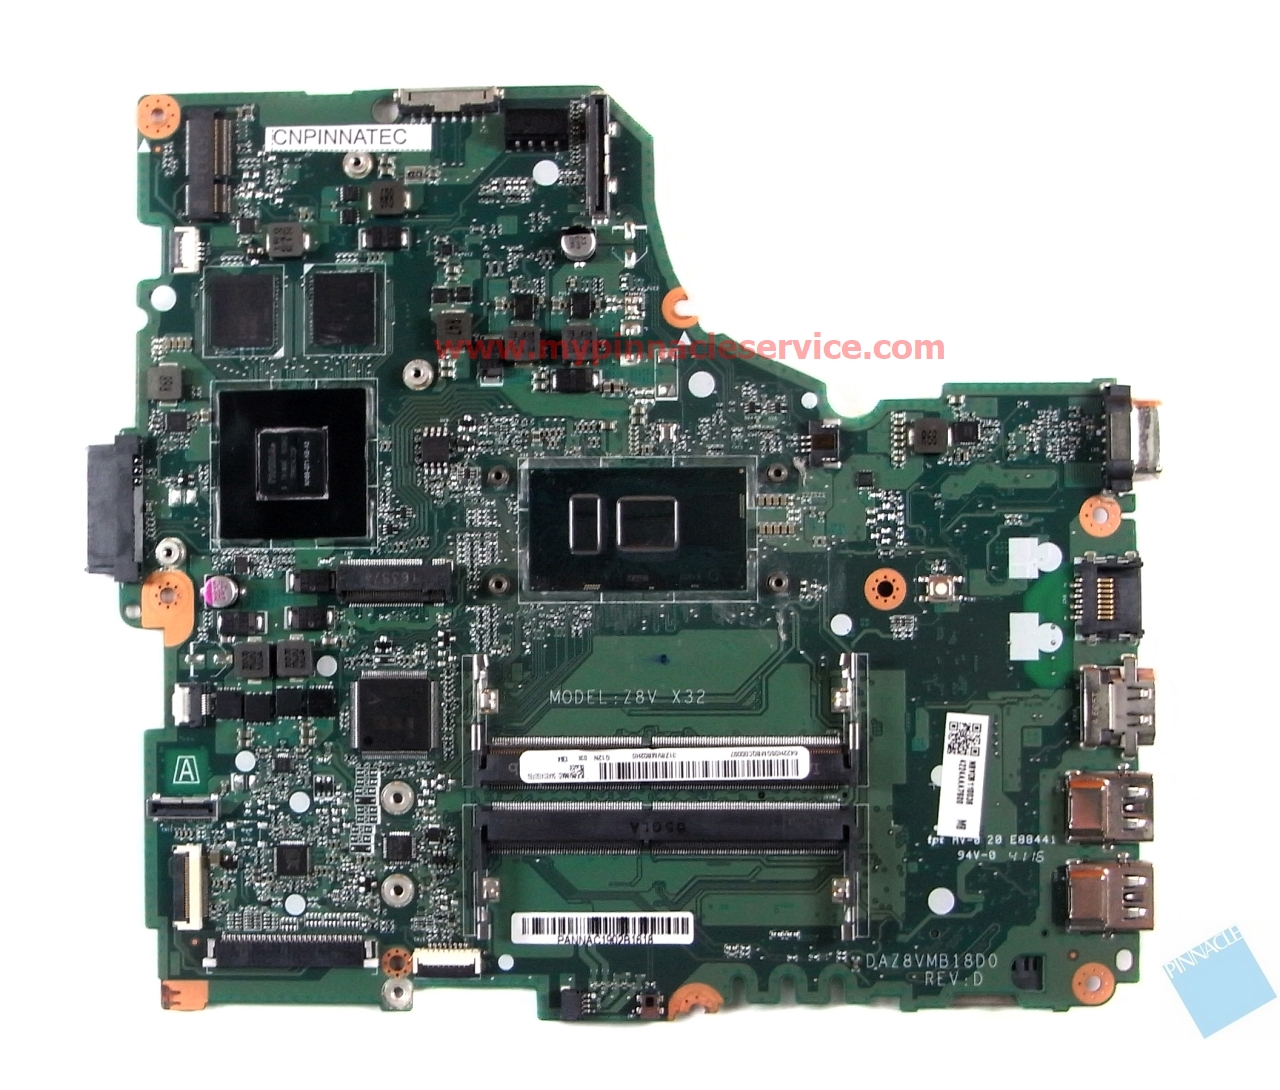 nbvd911003-i5-6200u-motherboard-for-aspire-e5-475g-daz8vmb18d0-rimg0174.jpg